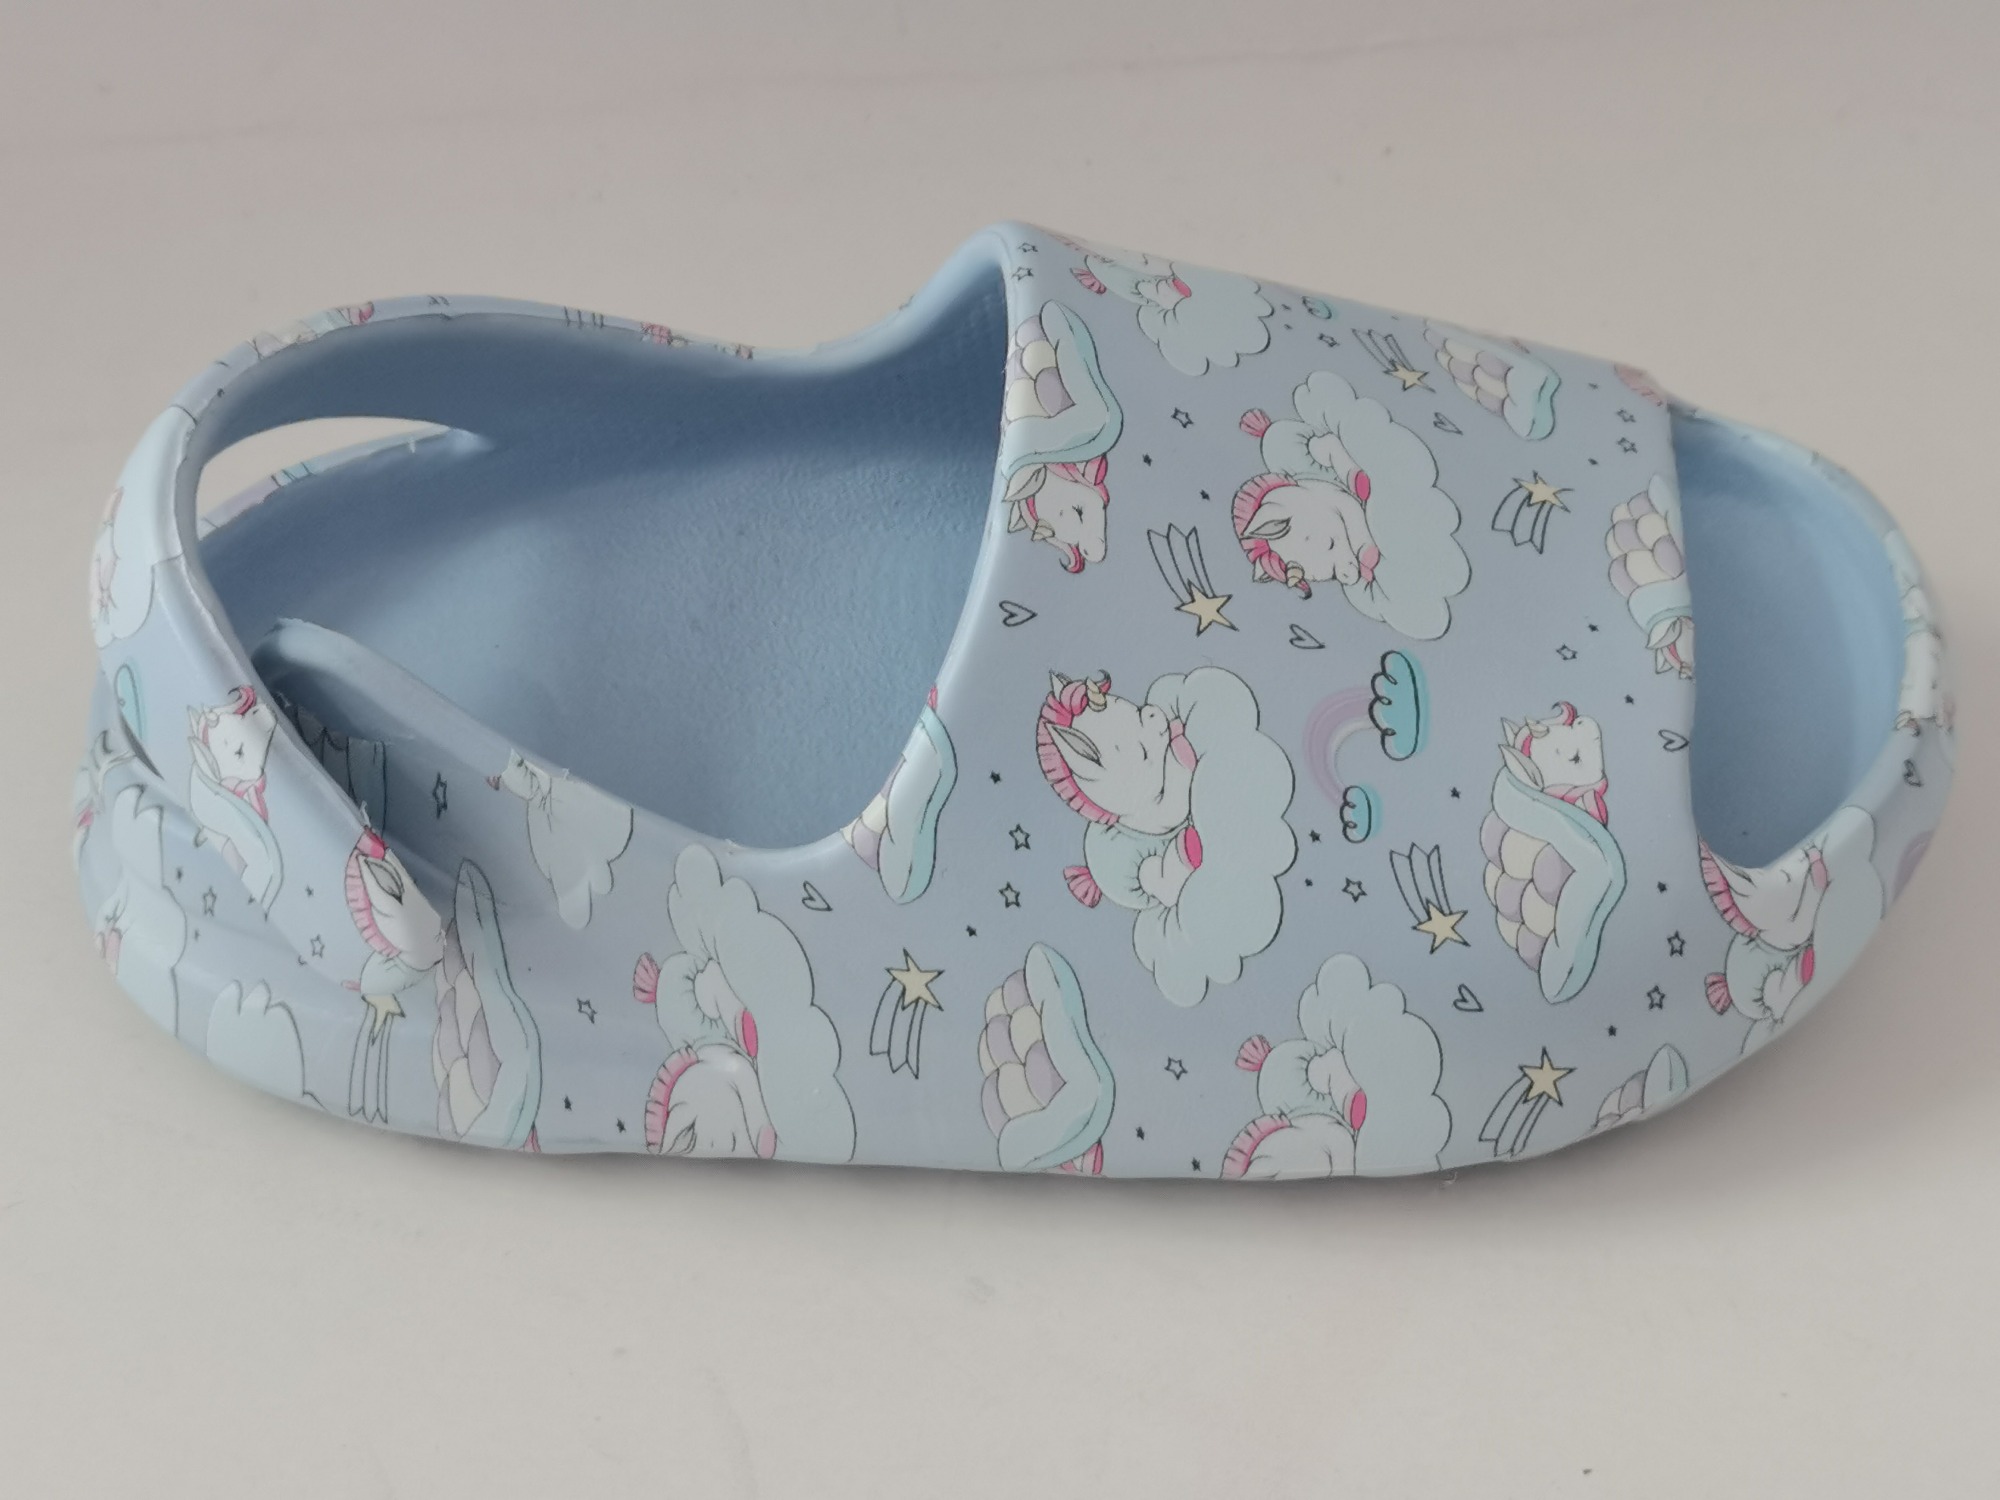 Summer Coconut Slippers Bag Heel Thick Sole EVA Sandals Children's Velcro Sandals